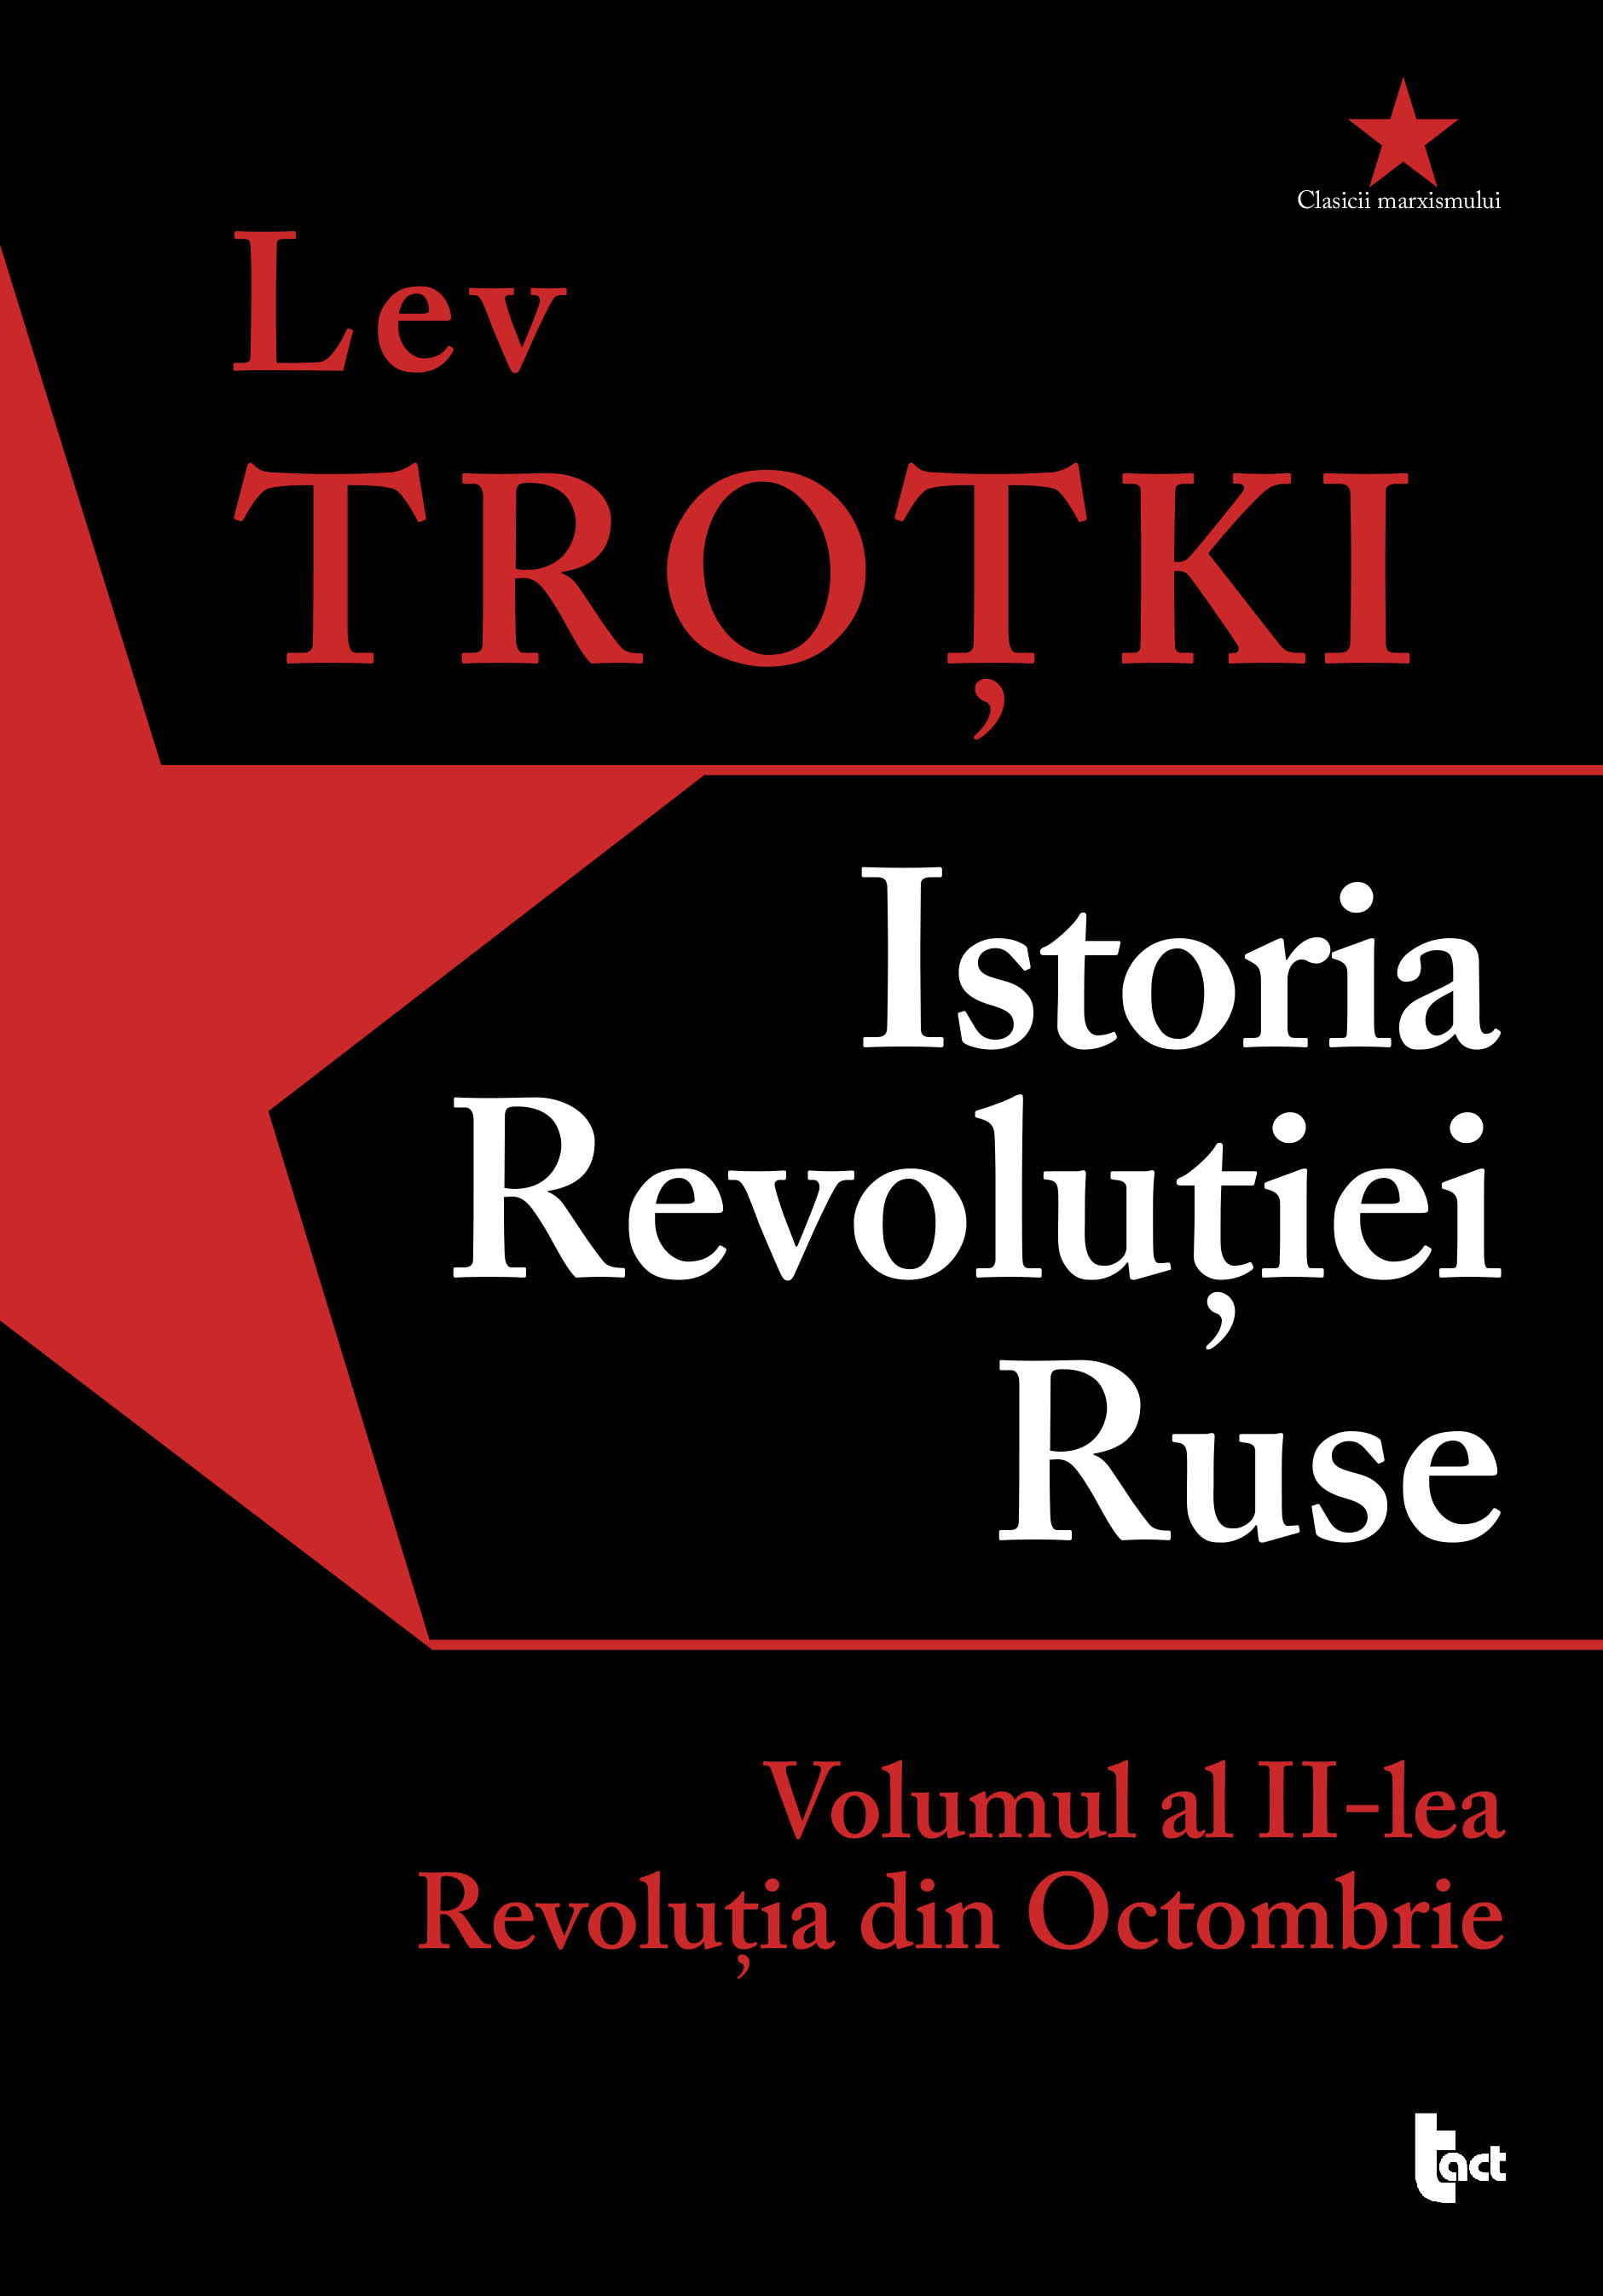 Istoria Revolutiei Ruse. Volumul al II-lea